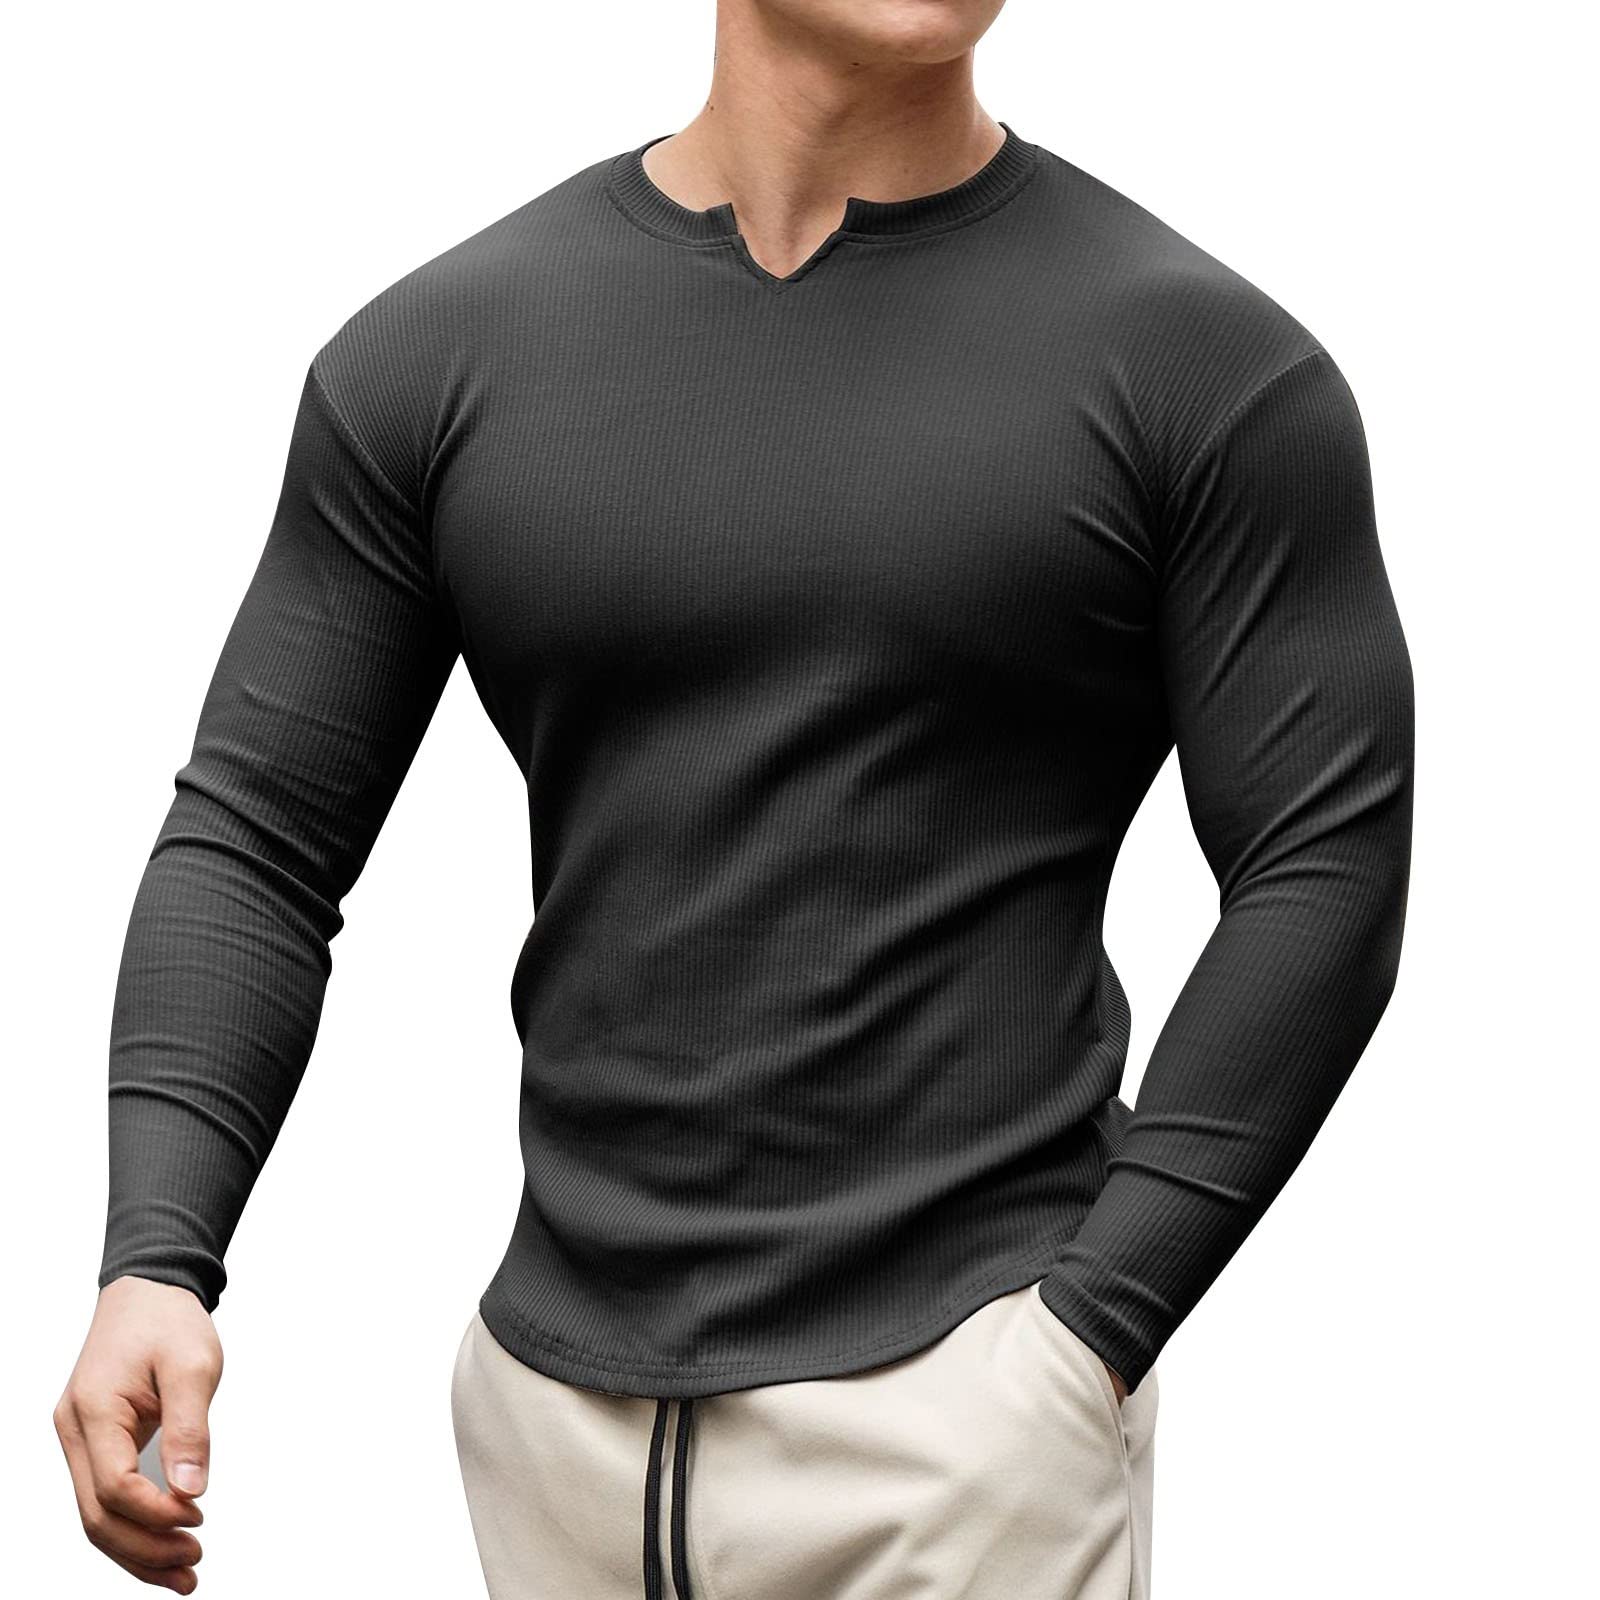 Men's Long Sleeve Shirts & Tops